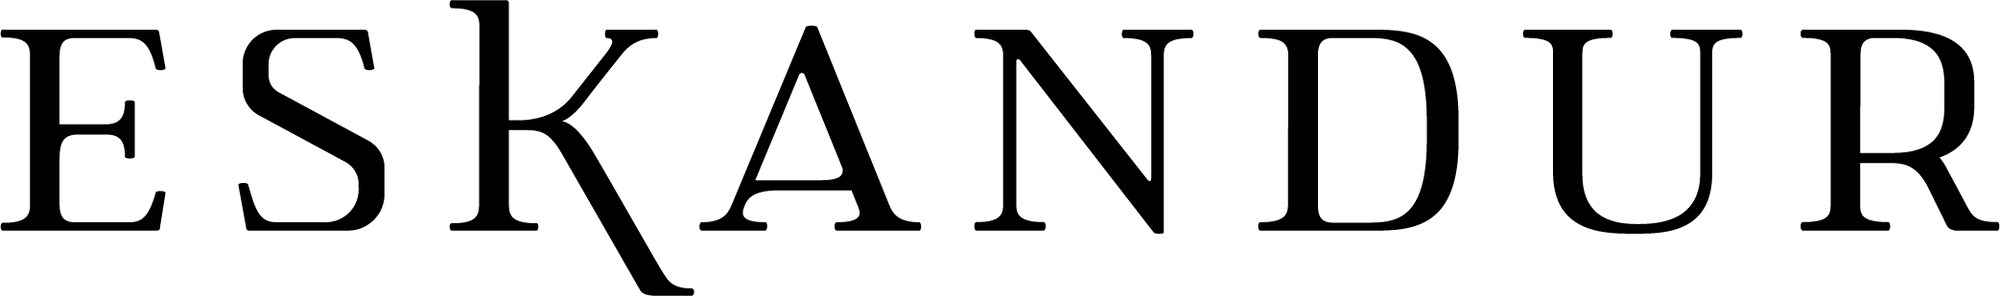 Eskandur logo in black color